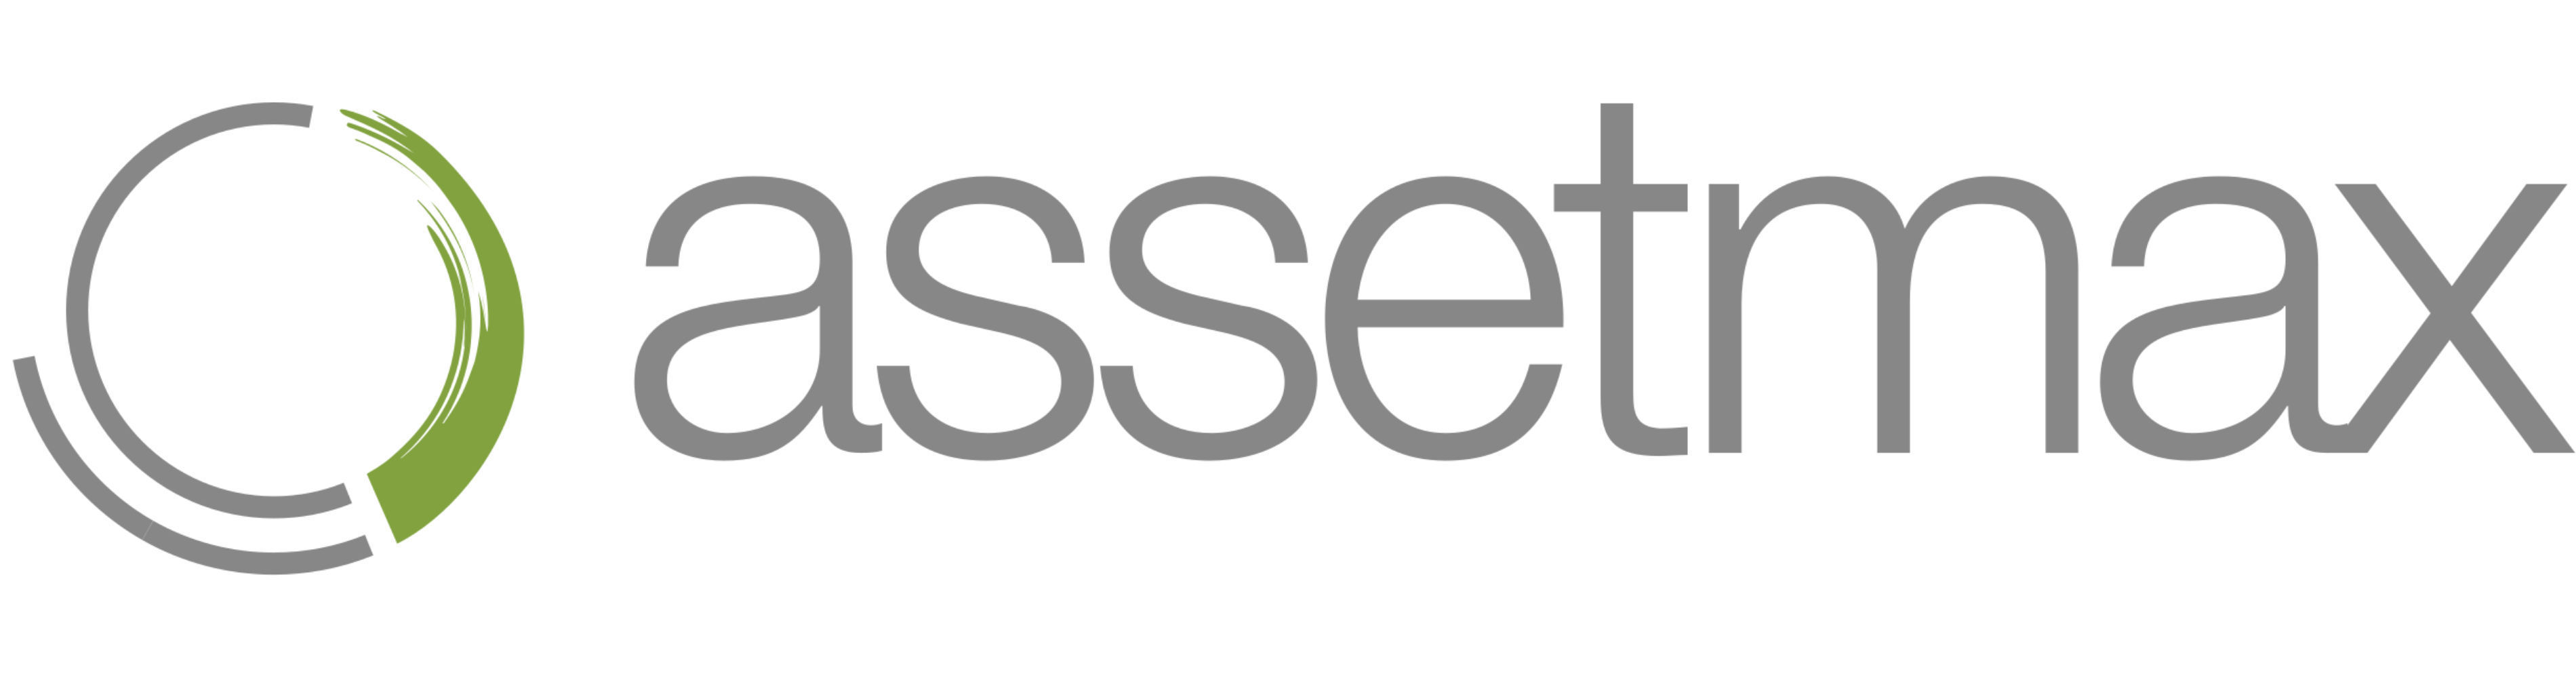 Assetmax - Investment Portfolio Management Software